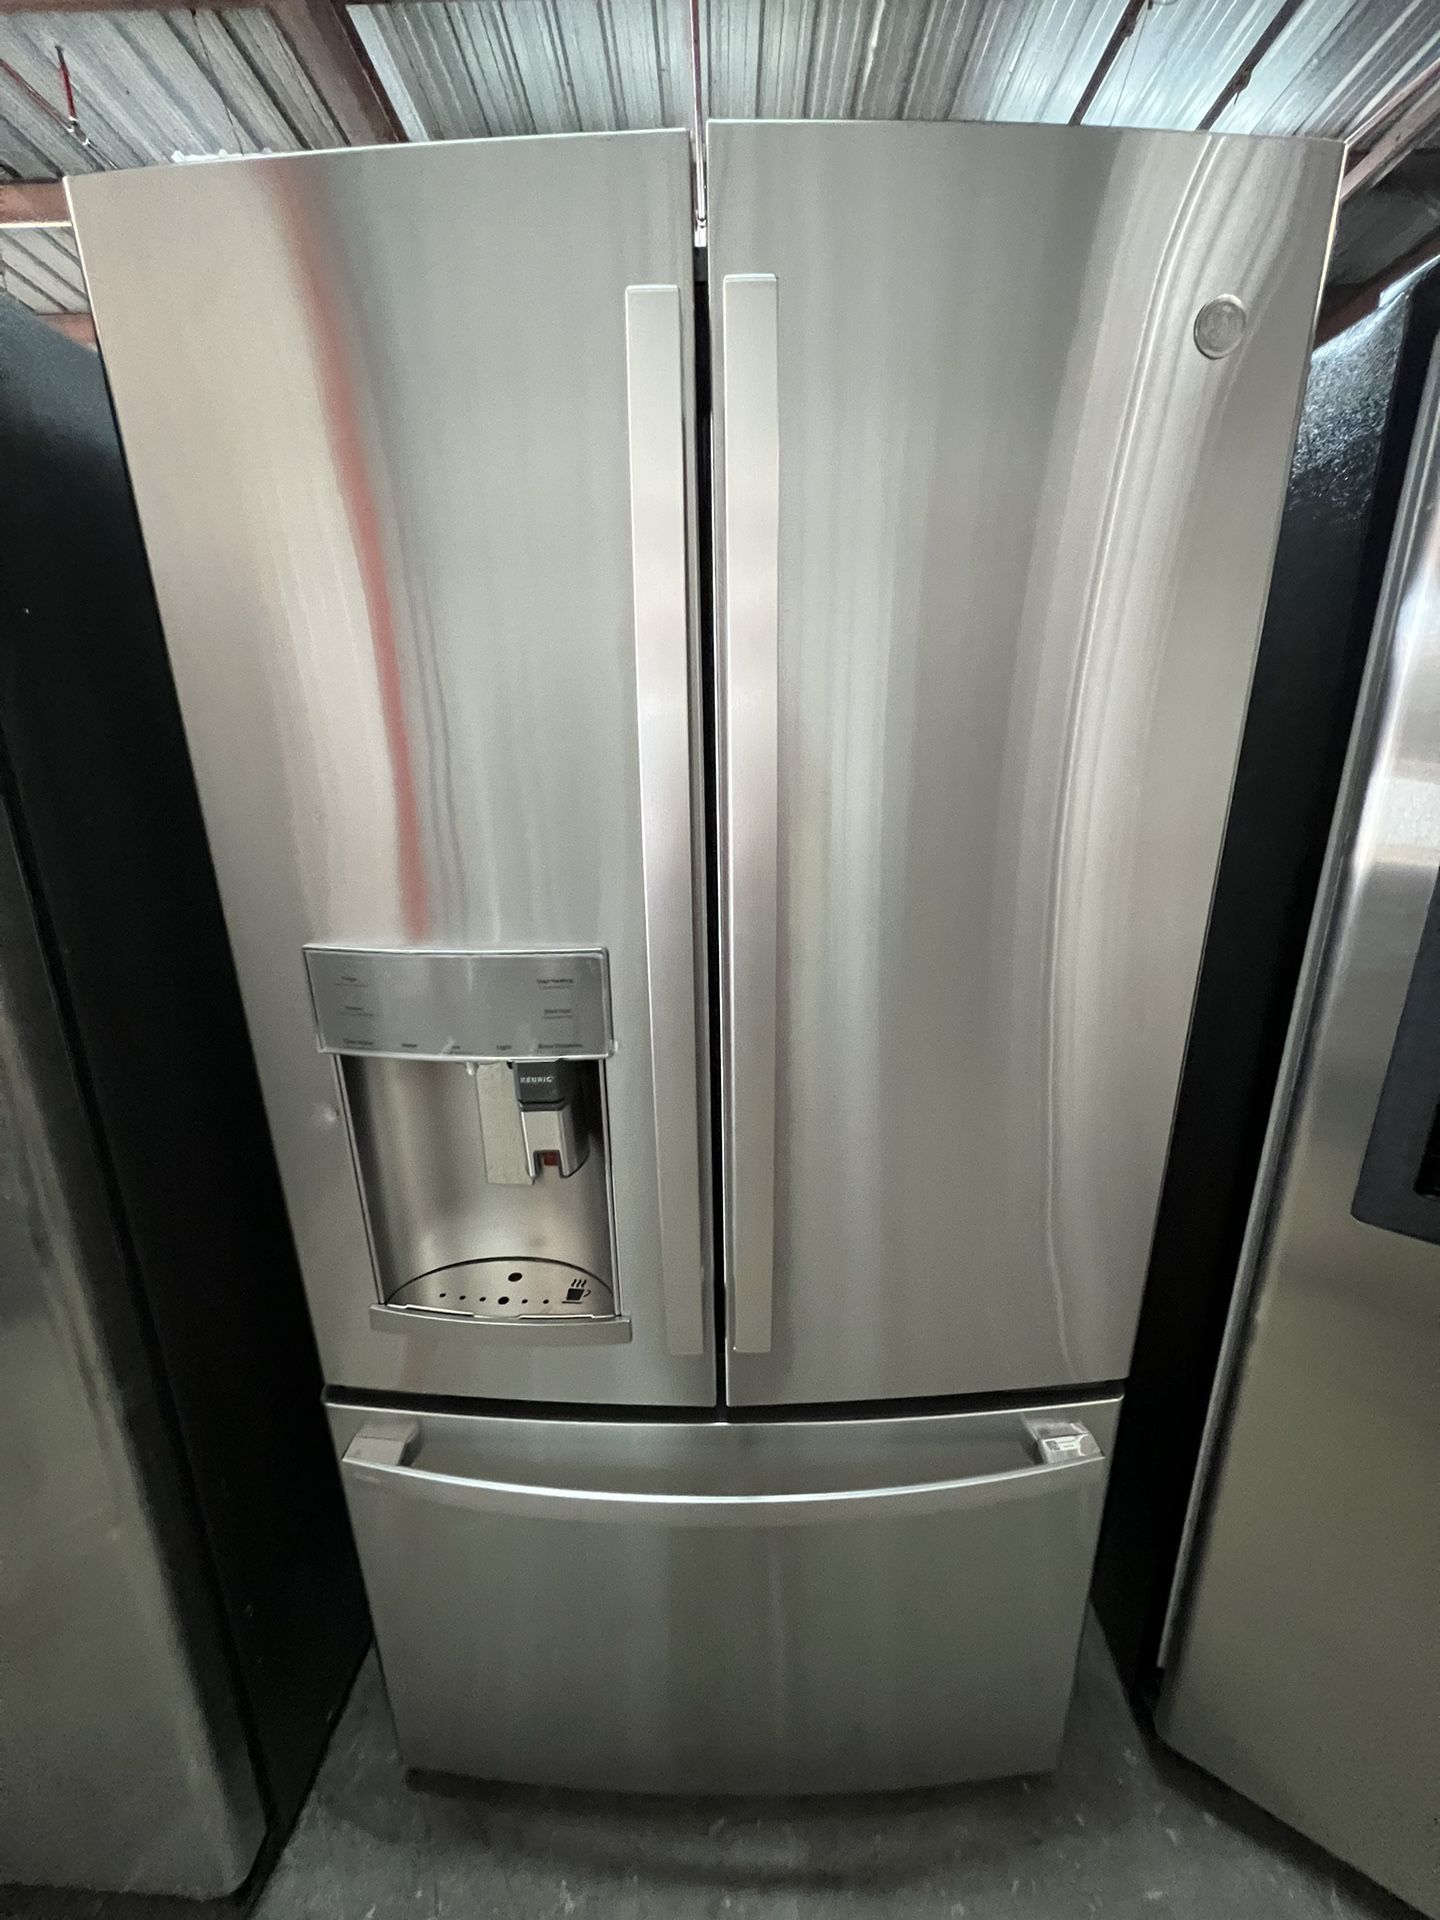 Ge Profile Counter, Depth Refrigerator With Keurig